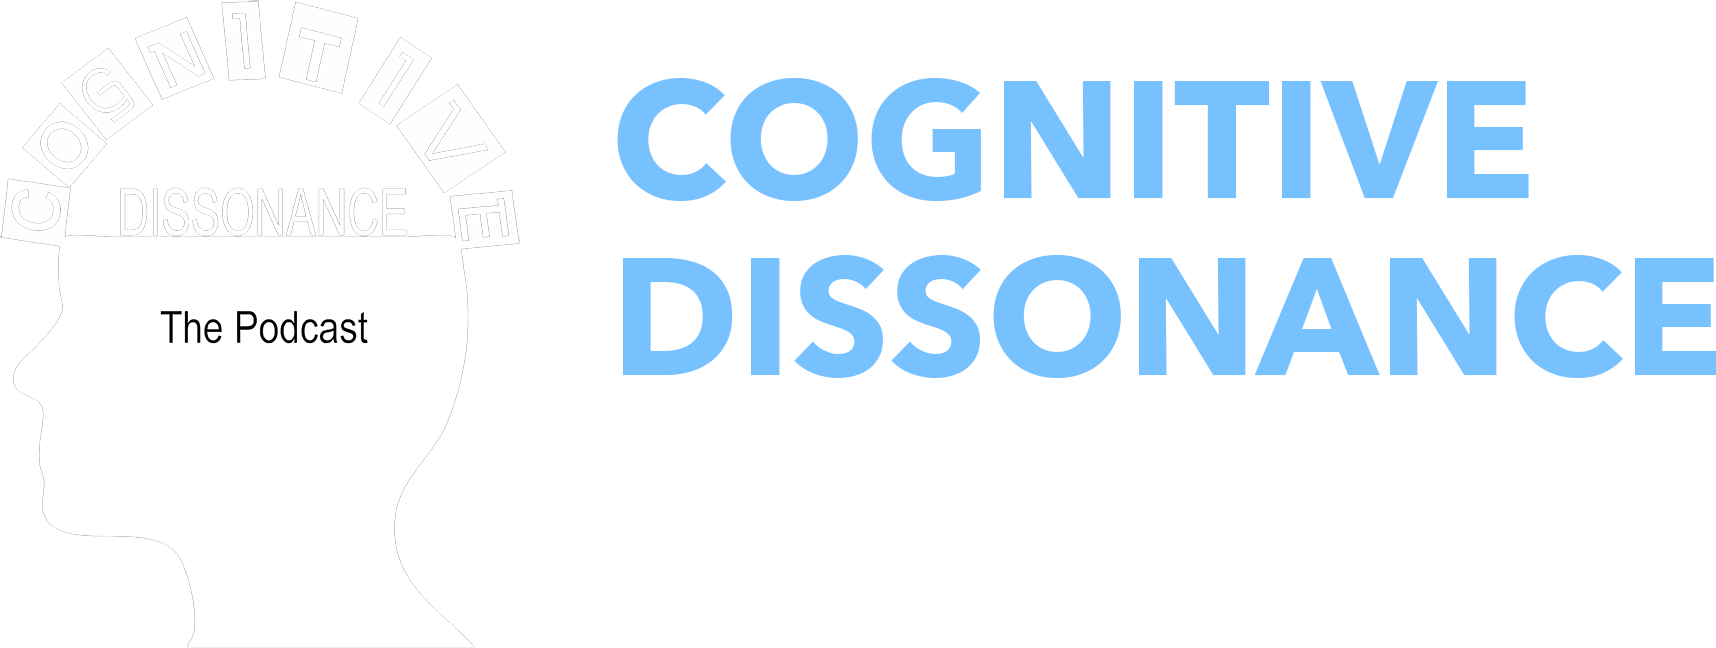 Cognitive Dissonance the Podcast